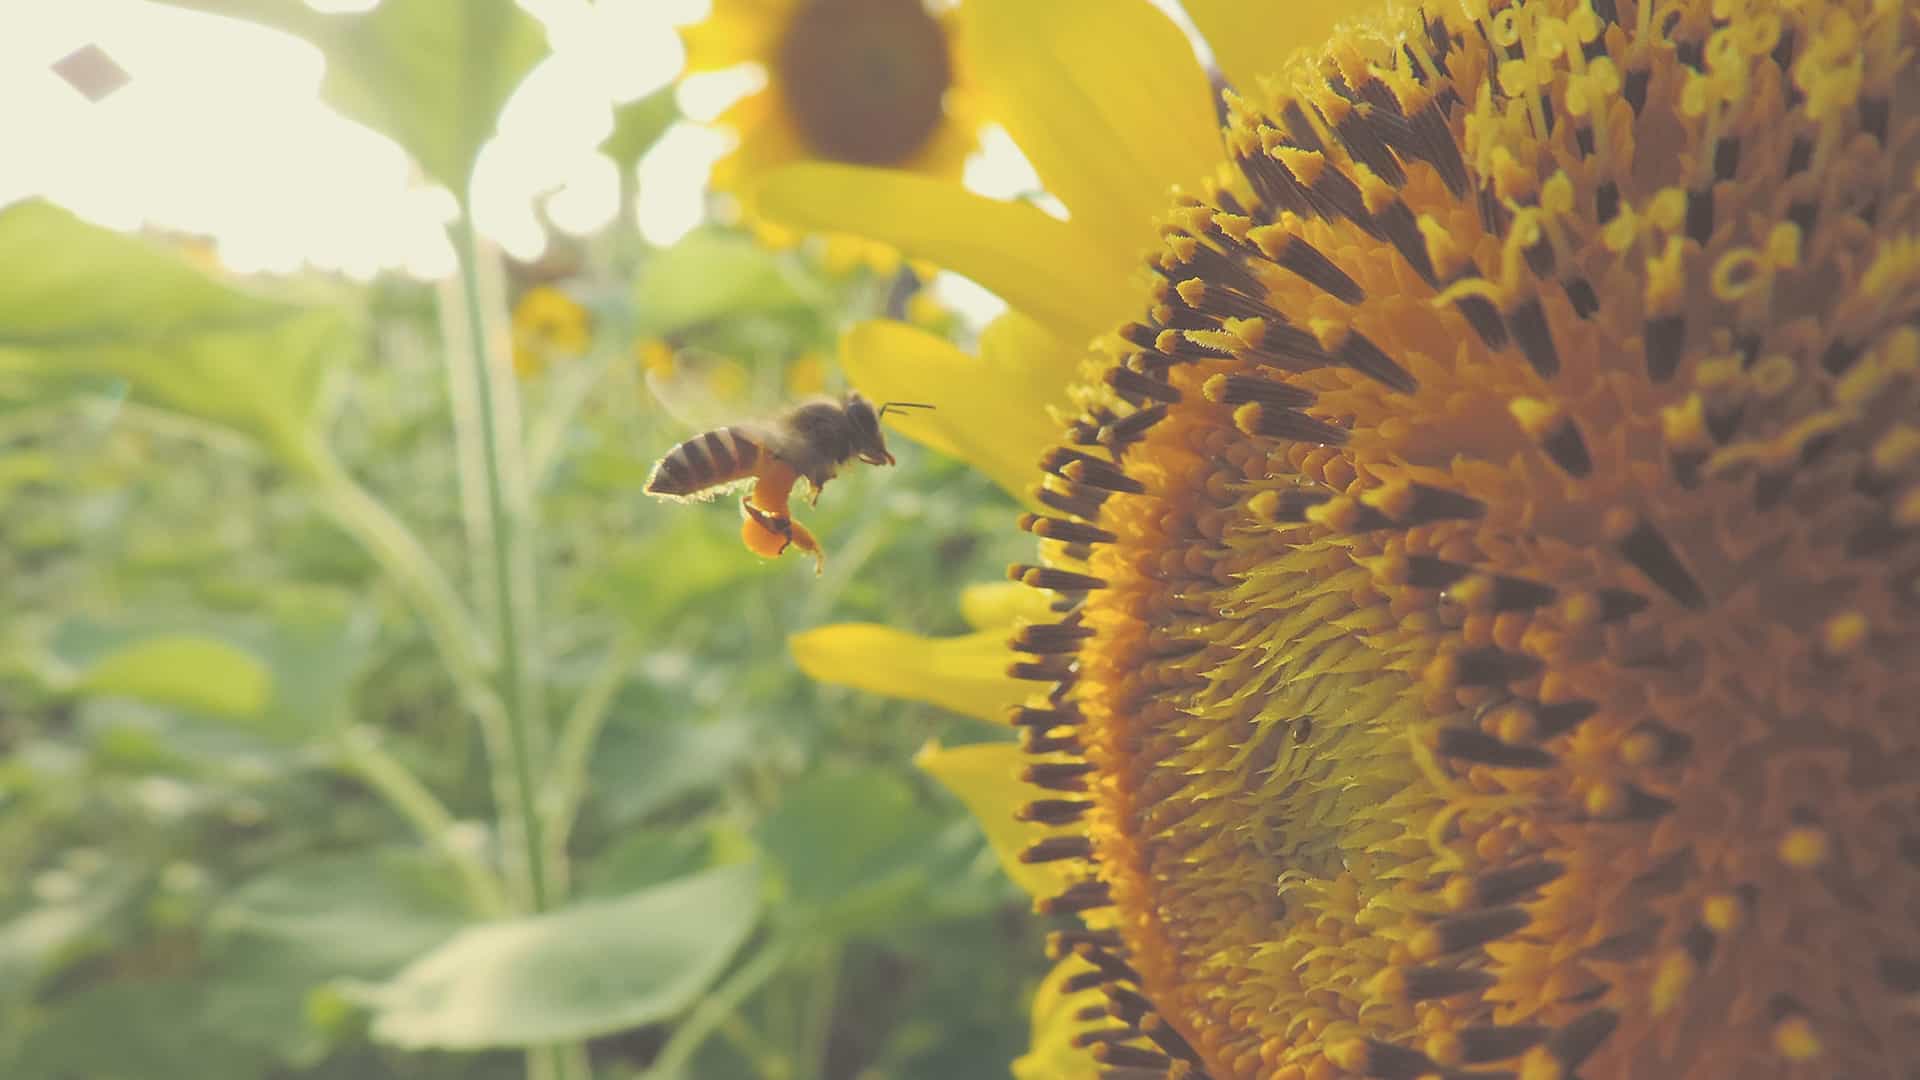 Treat bees as petss